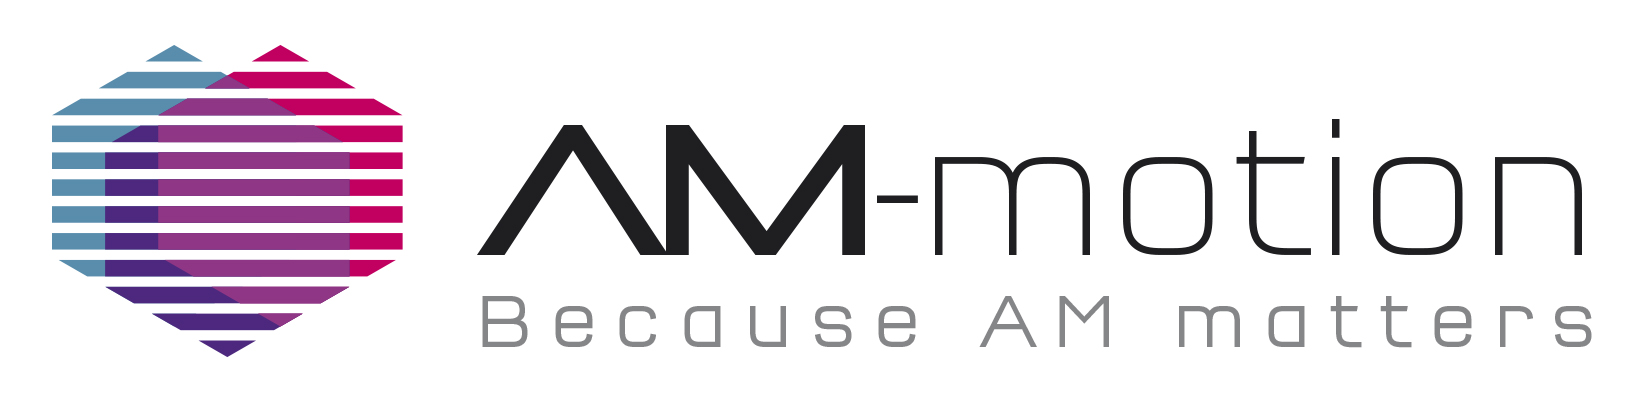 AM motion Logo Color Horizontal